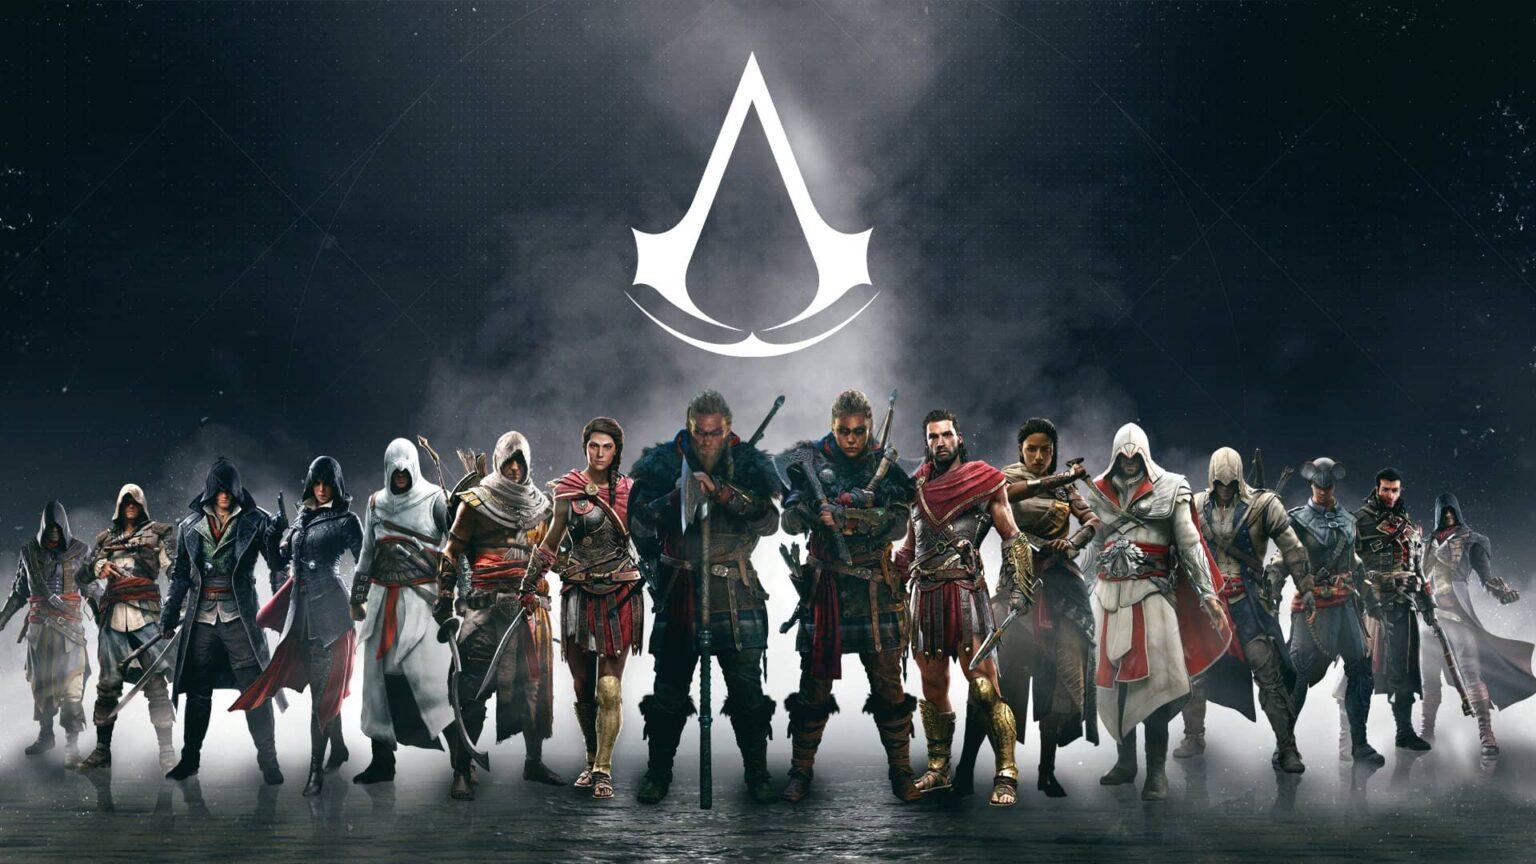 SE ESCONDENDO. 22 - Assassin's Creed ® III 